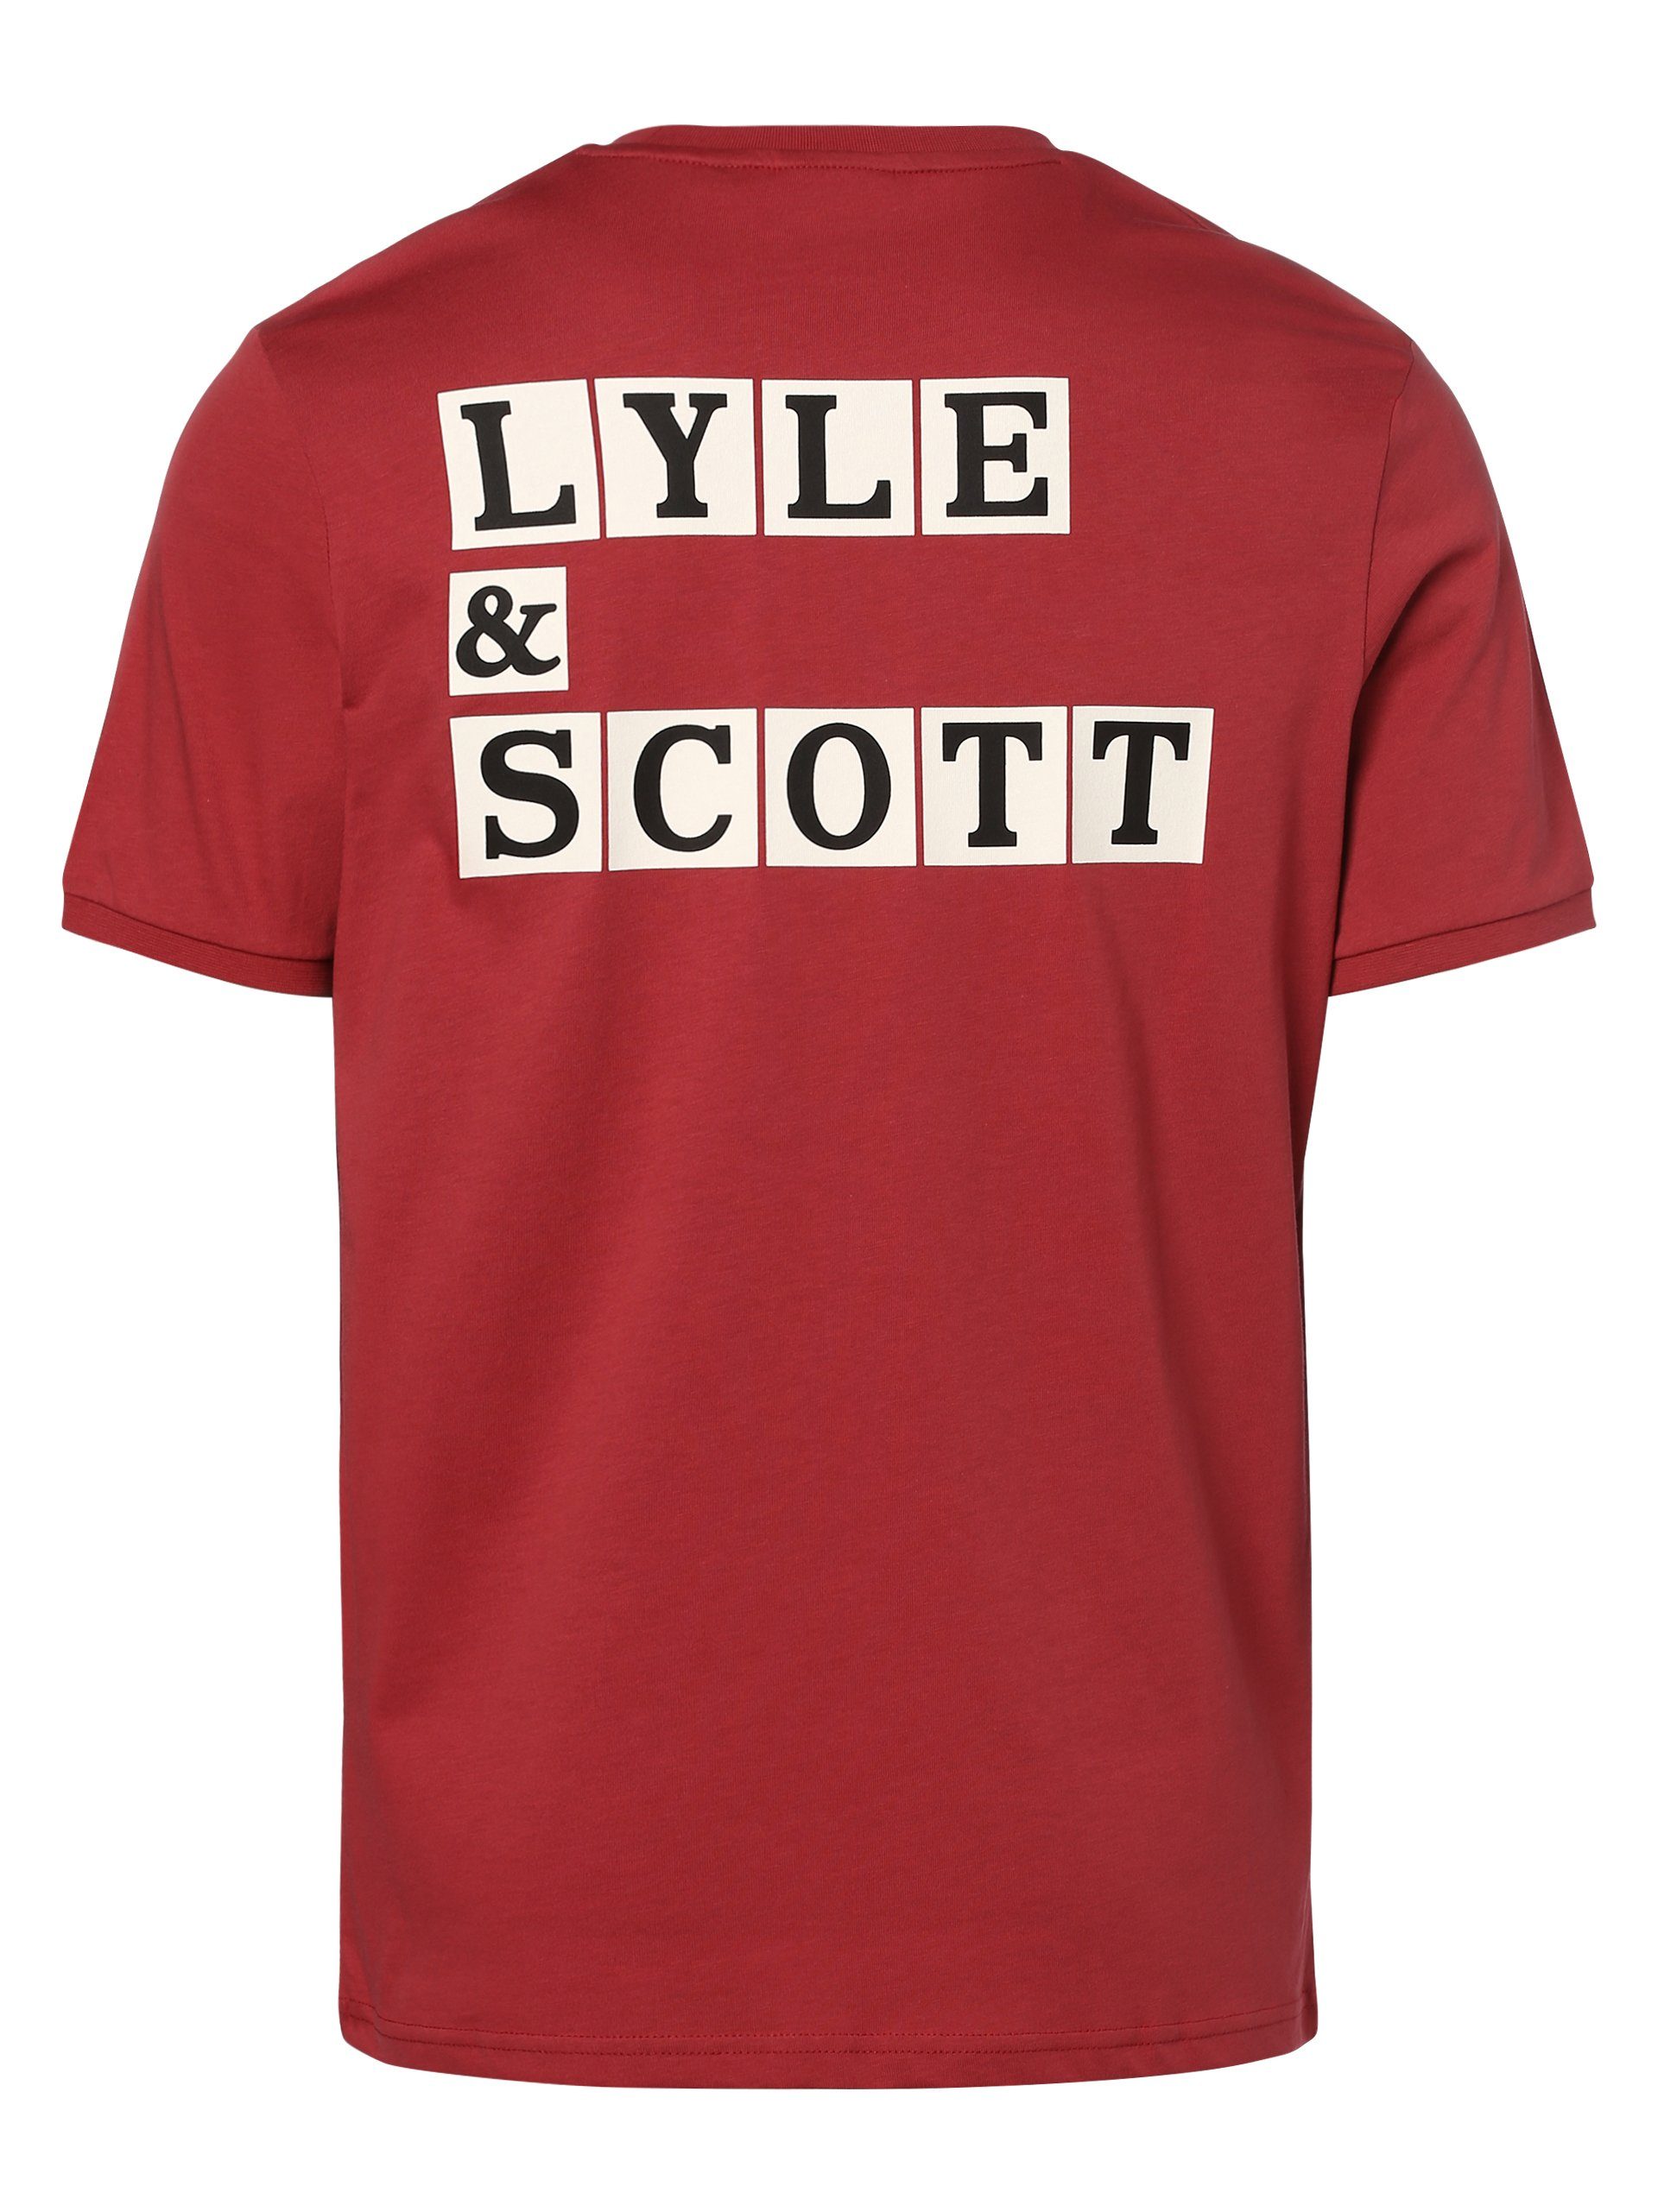 himbeer T-Shirt & Scott Lyle